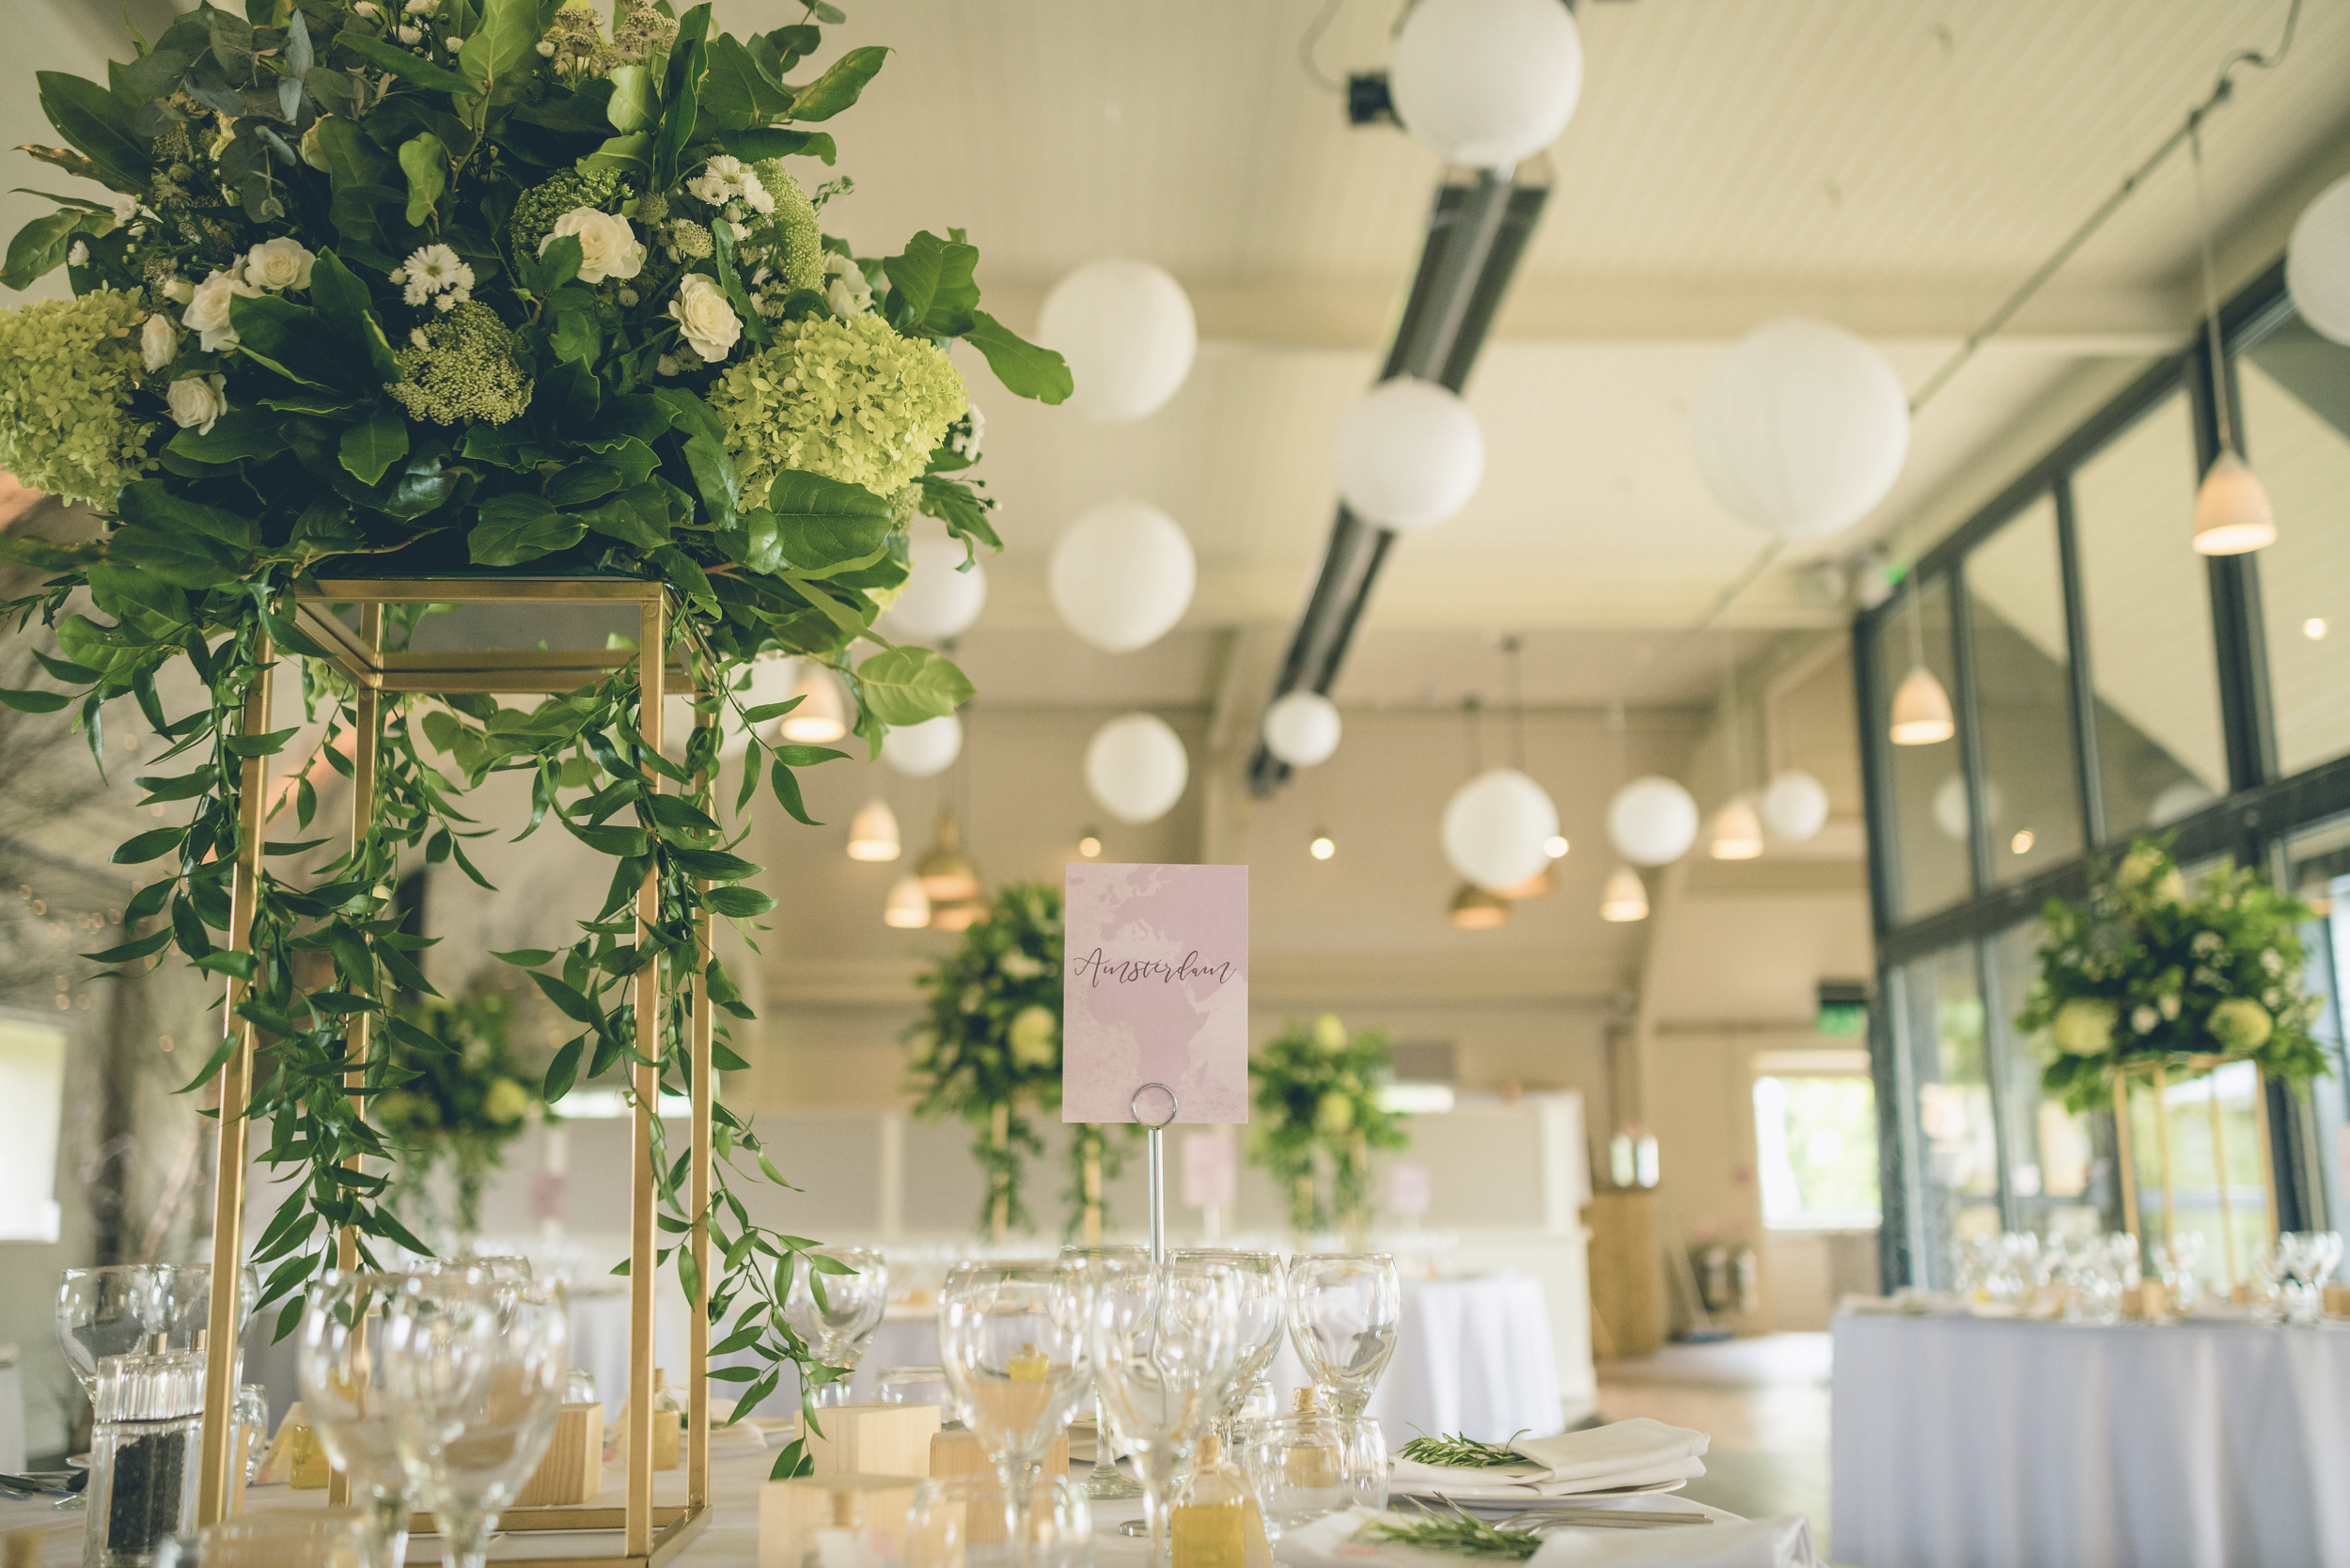 Lapstone Barn Wedding Venue, Travel inspired Table Name